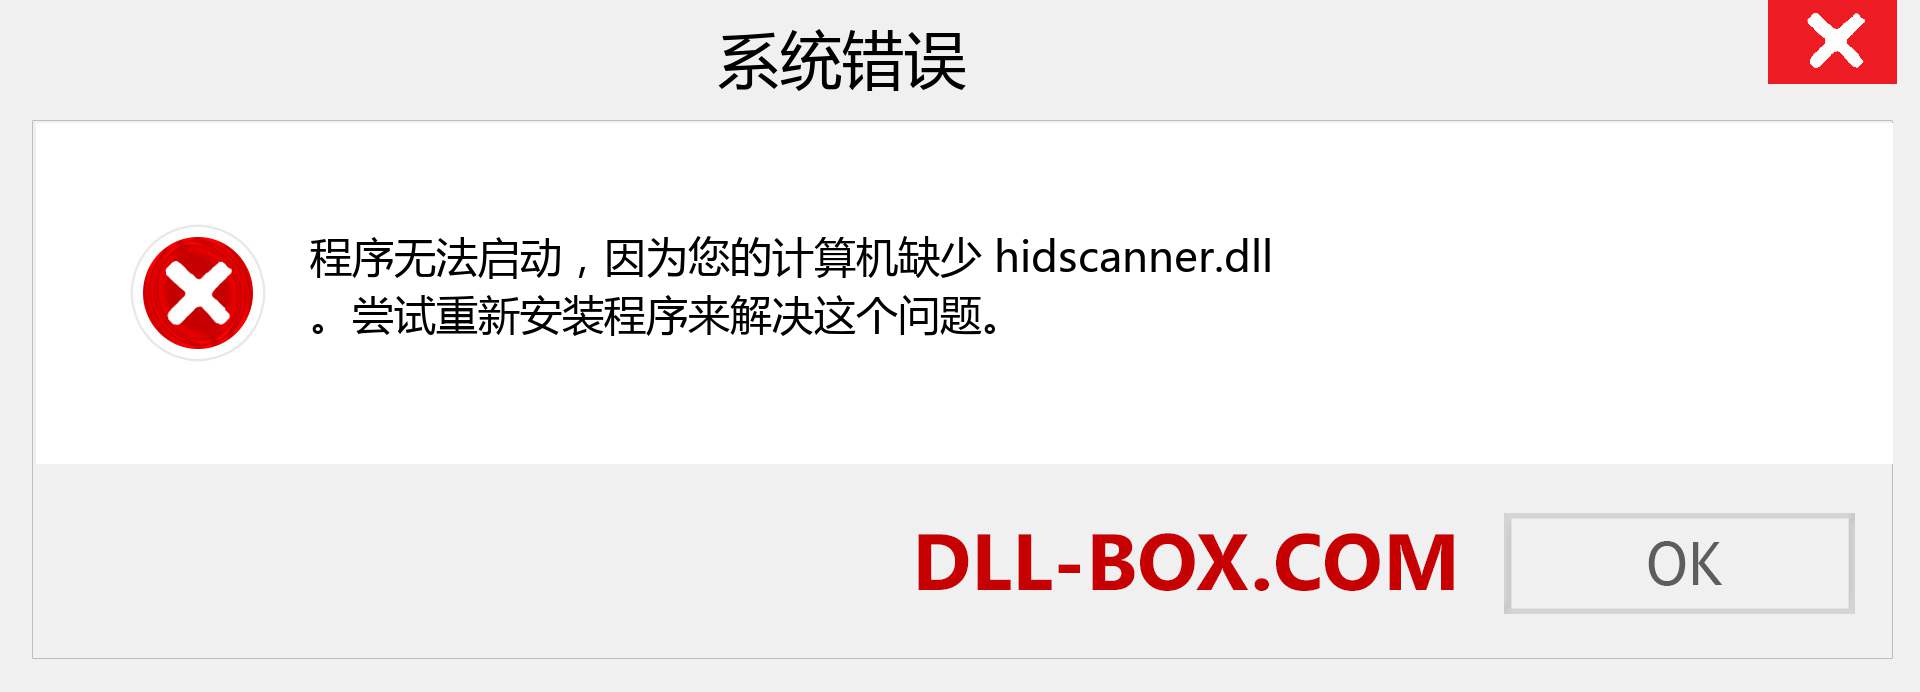 hidscanner.dll 文件丢失？。 适用于 Windows 7、8、10 的下载 - 修复 Windows、照片、图像上的 hidscanner dll 丢失错误